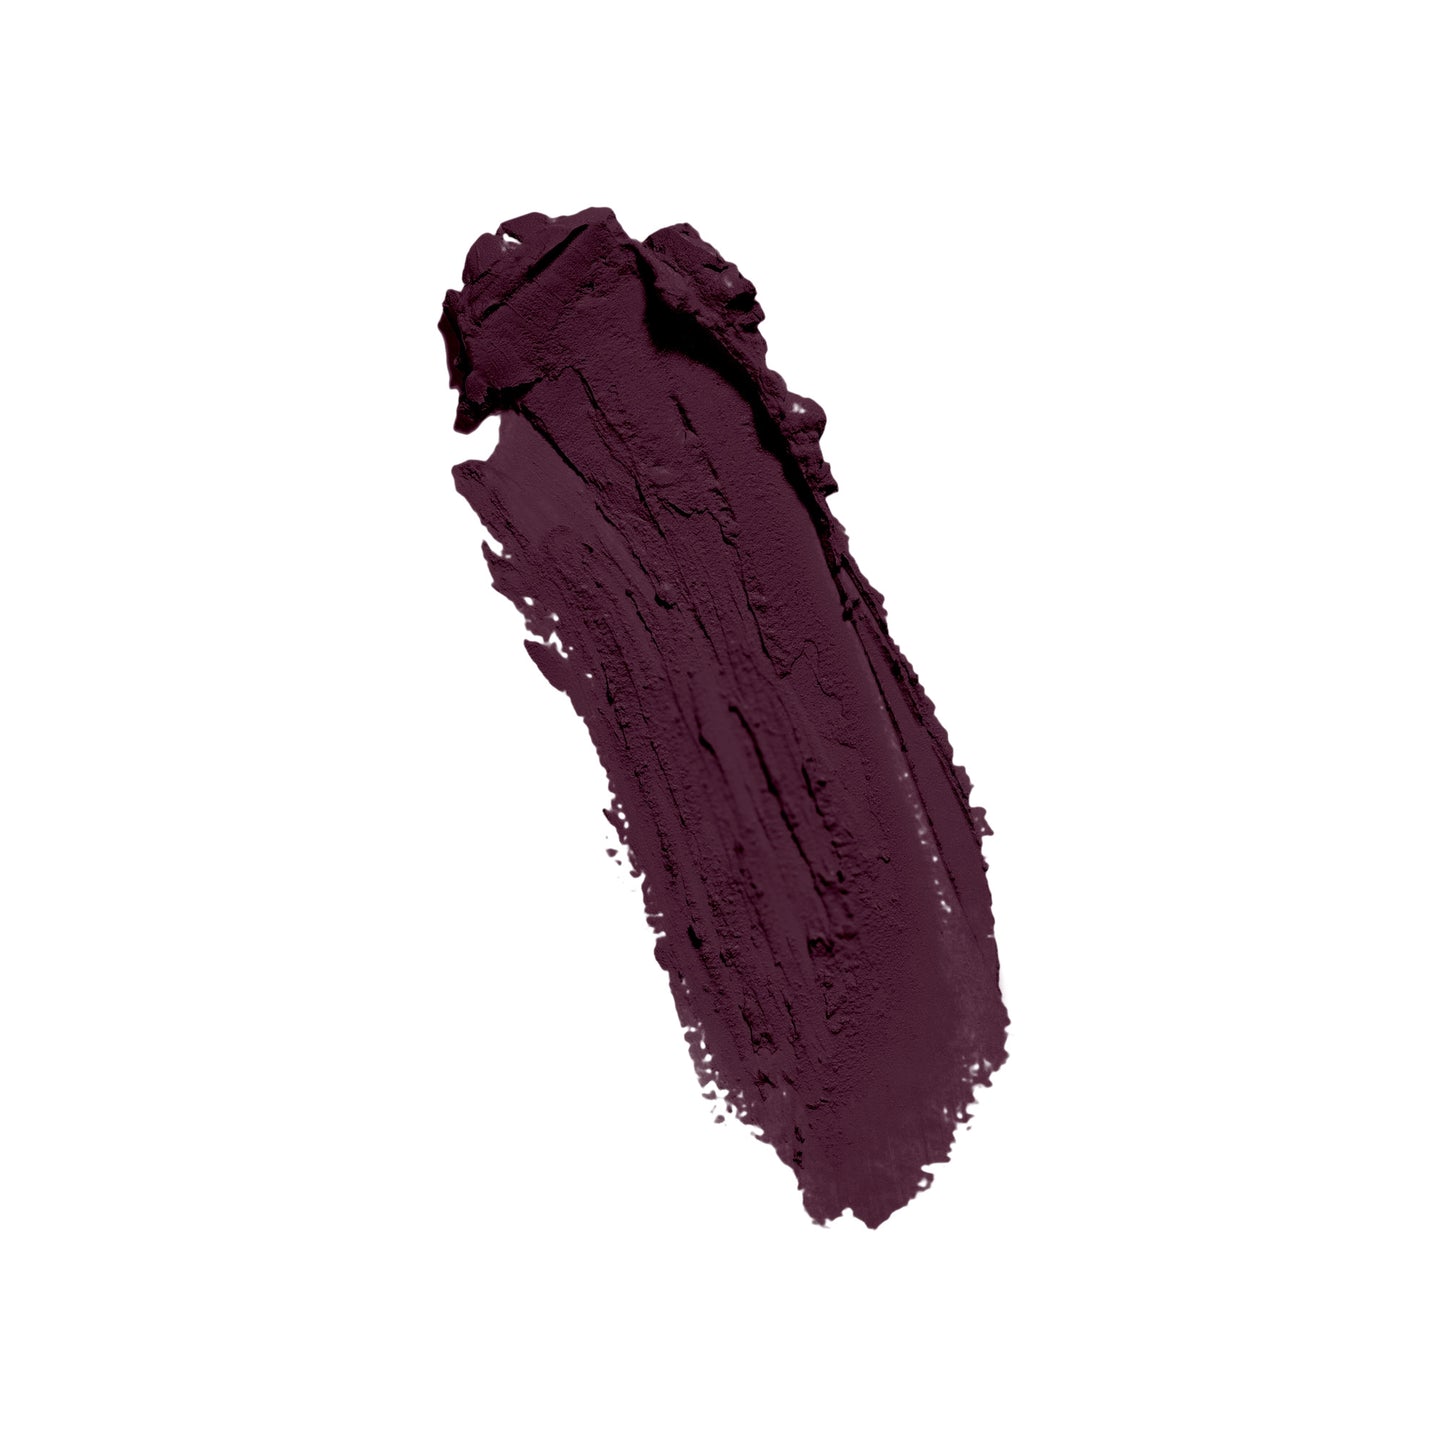 NXTE NXTEssence Black Berry Lip Stick Swatch Color